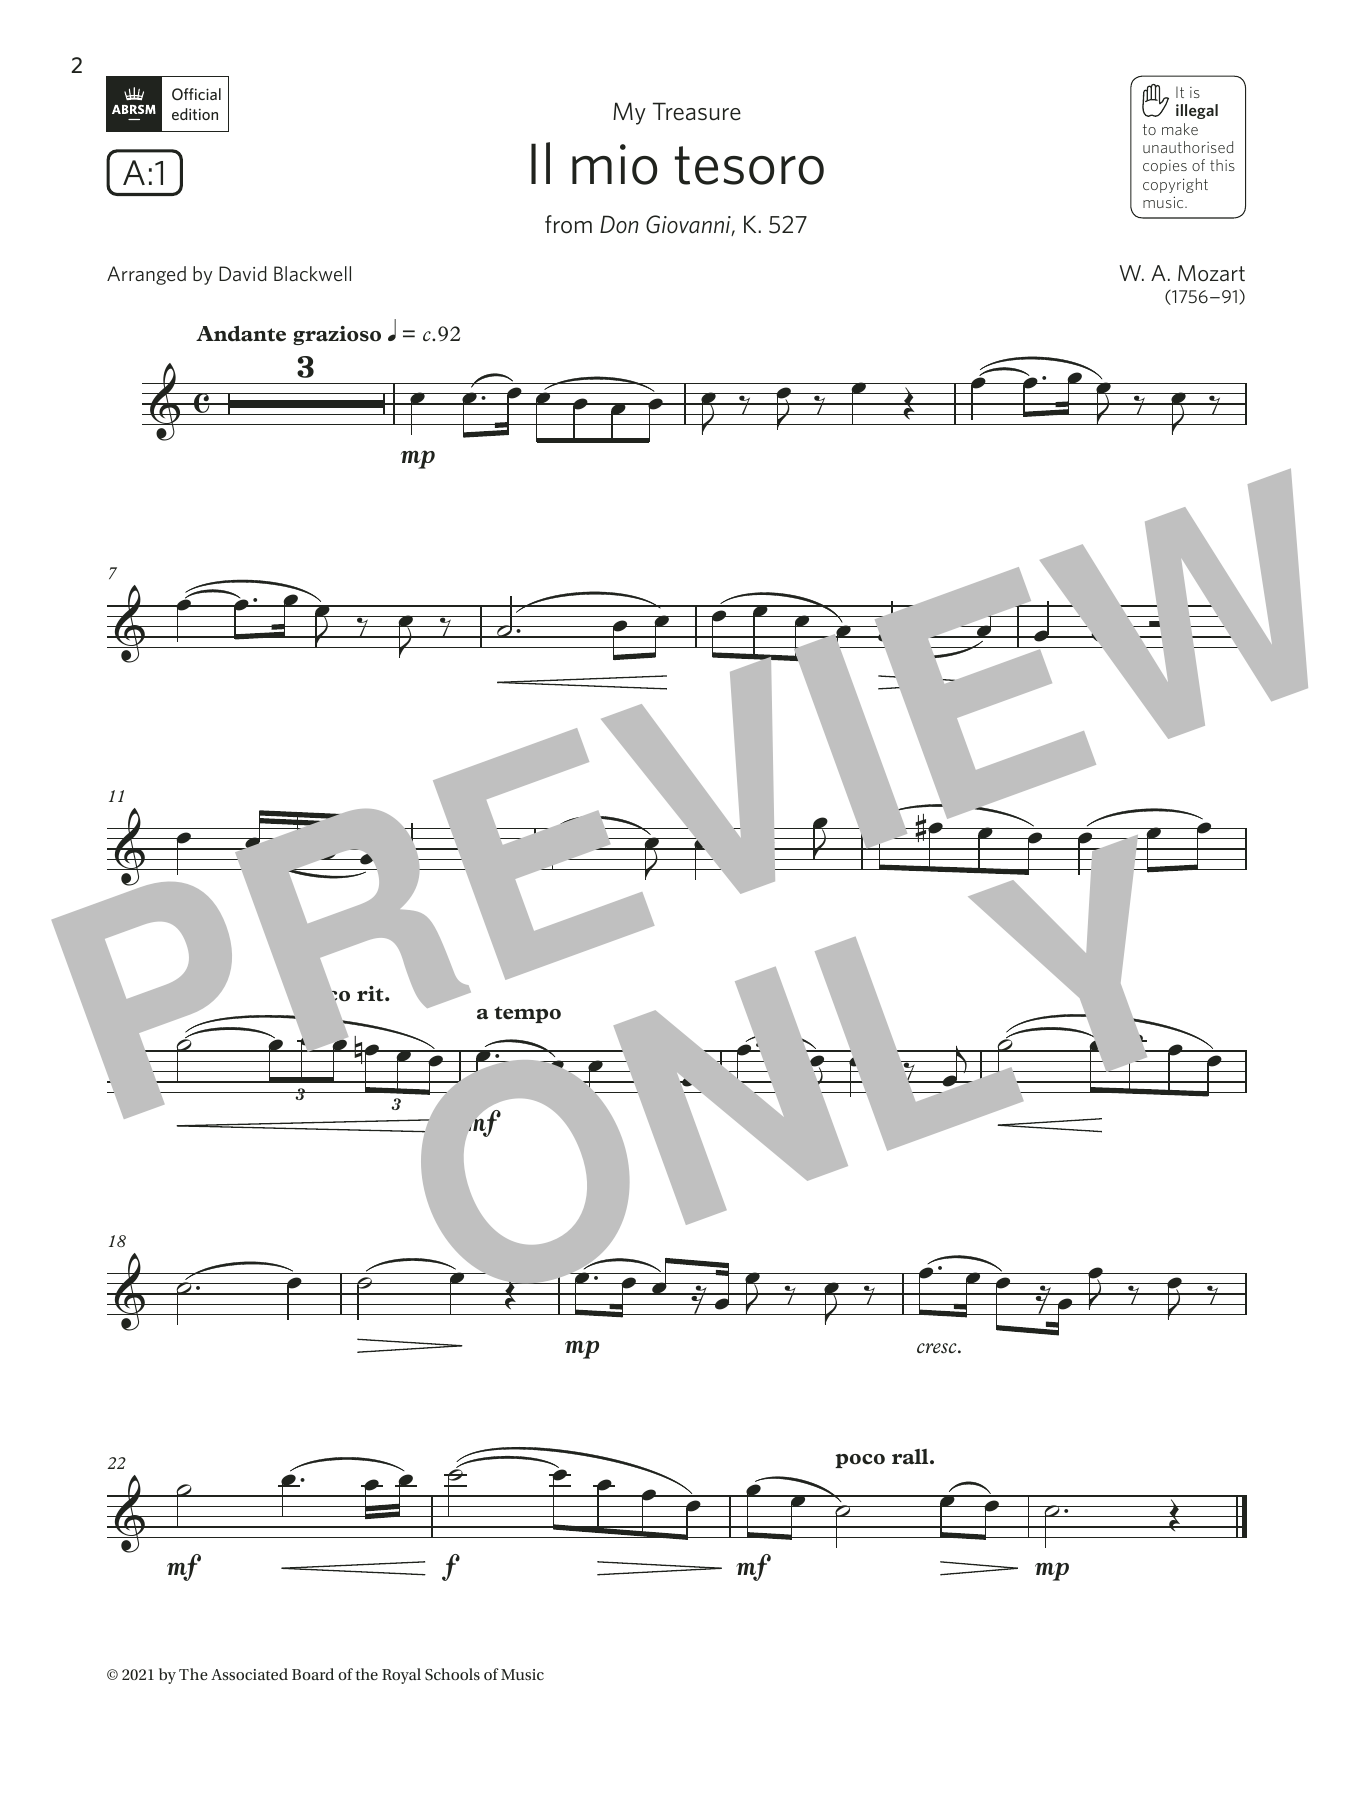 Download Wolfgang Amadeus Mozart Il mio tesoro (from Don Giovanni) (Gra Sheet Music